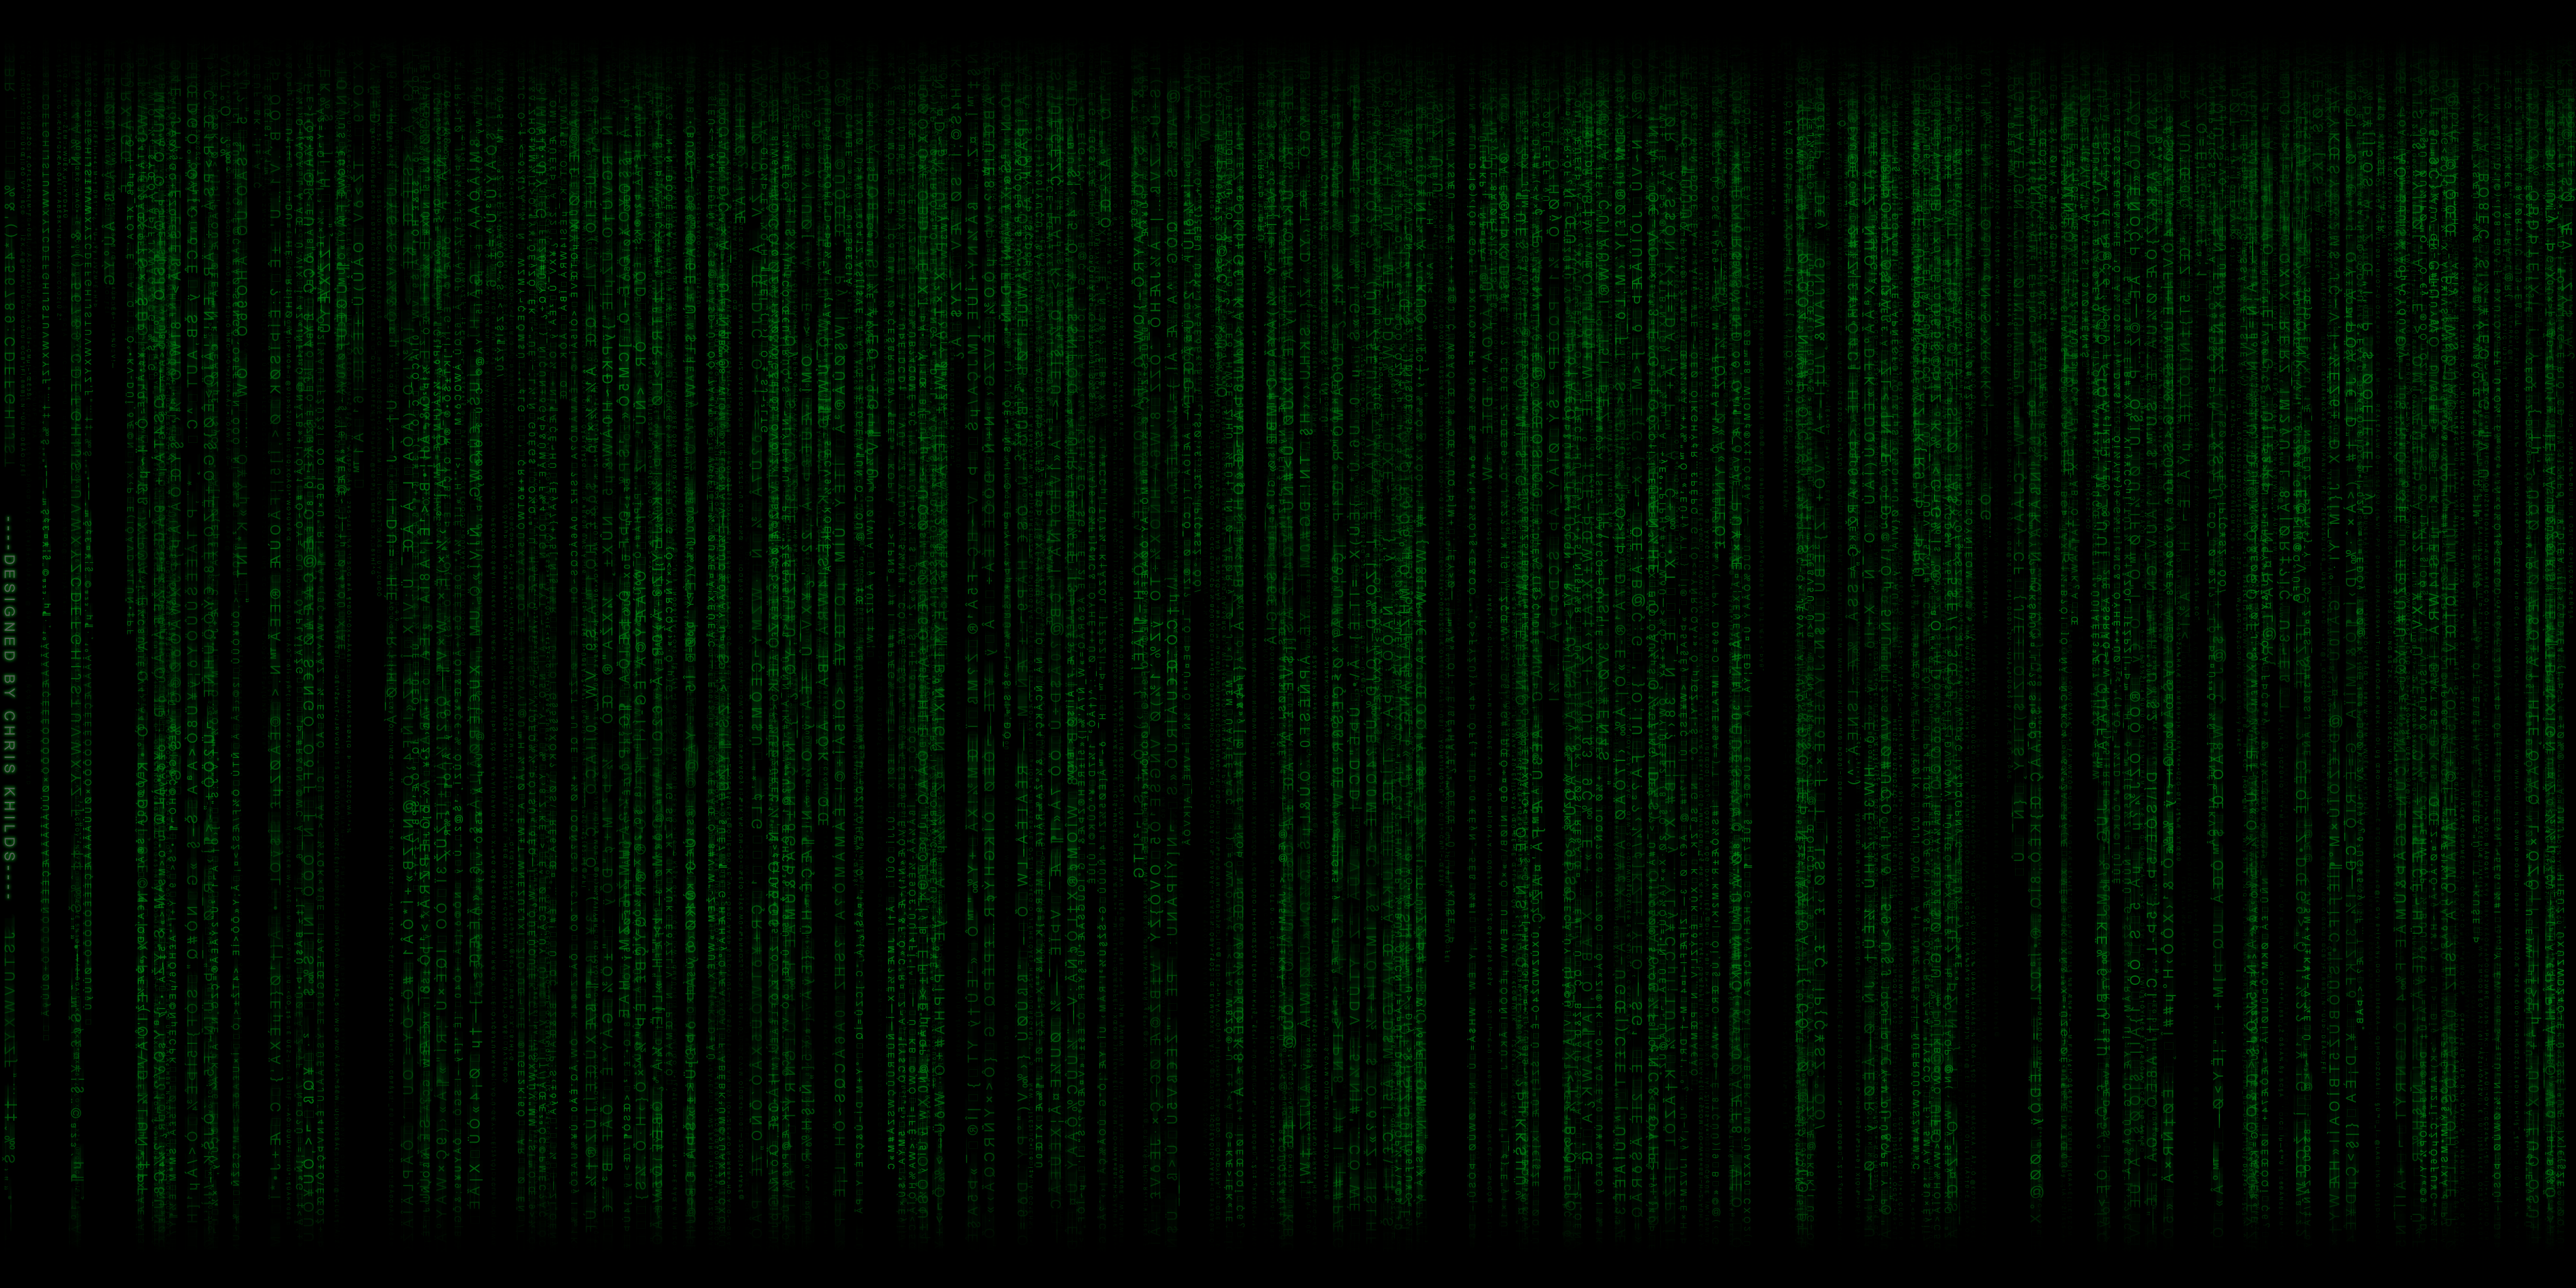 High quality matrix code wallpaper 106 .amp.ikimaru.com